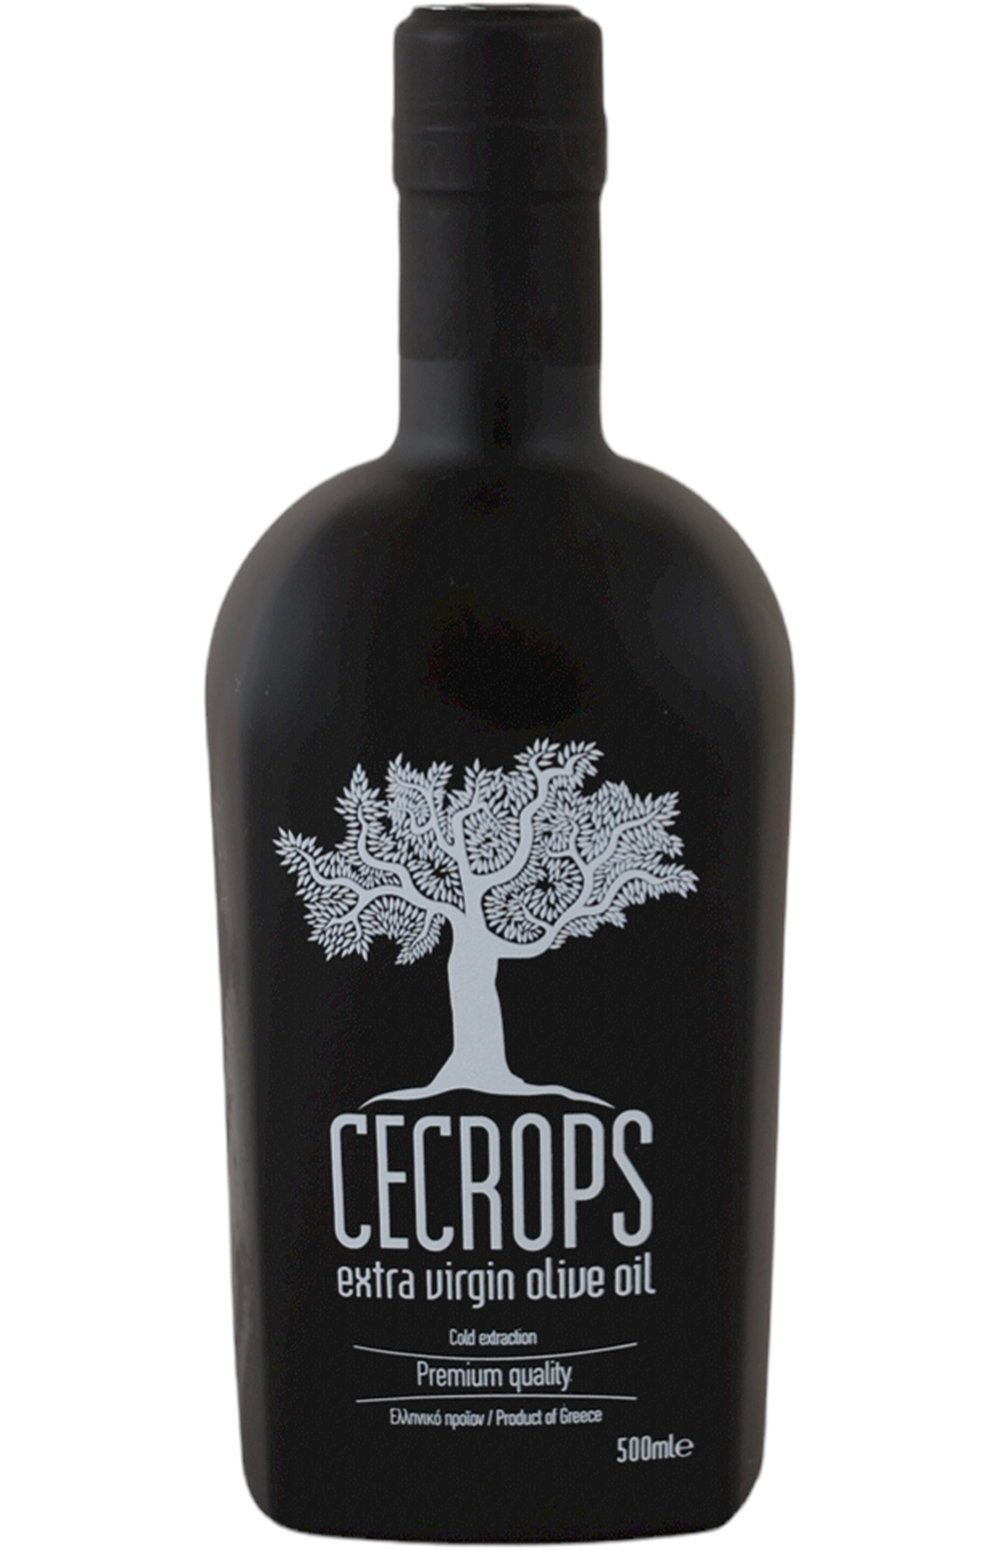 Cecrops Premium Quality Extra Virgin Olive Oil